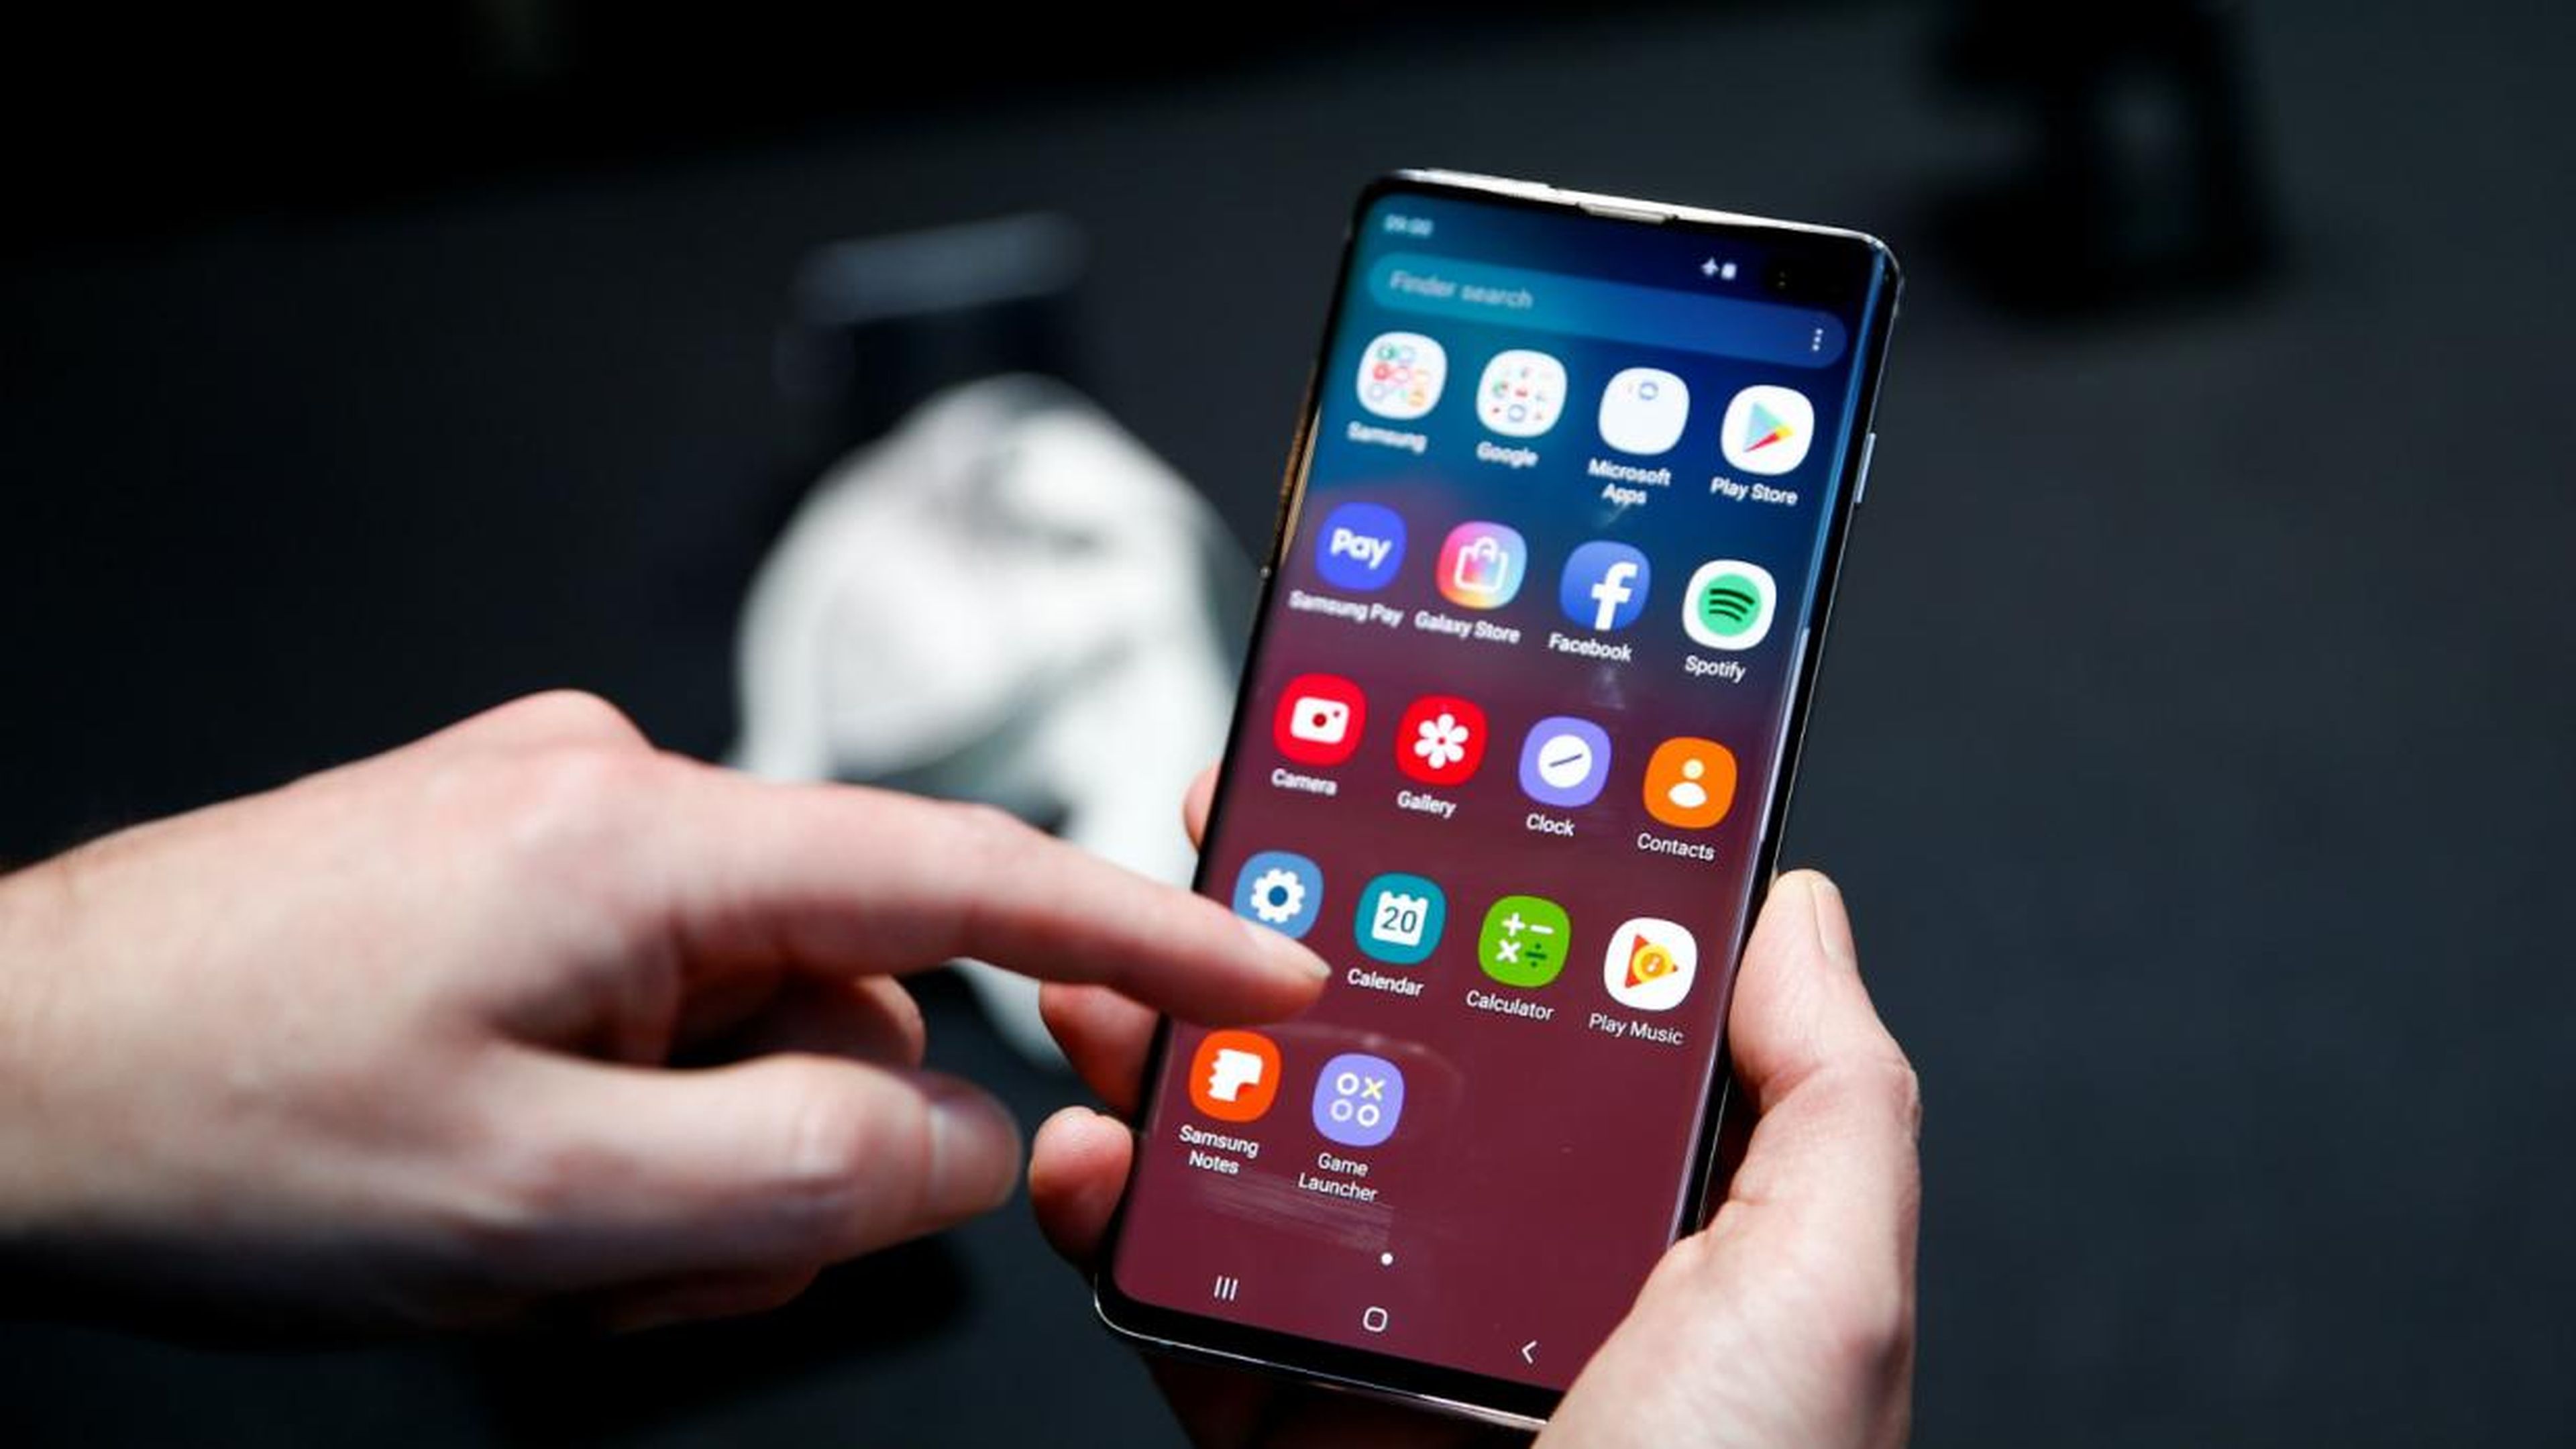 Samsung Galaxy S10+, análisis. Review con características, precio